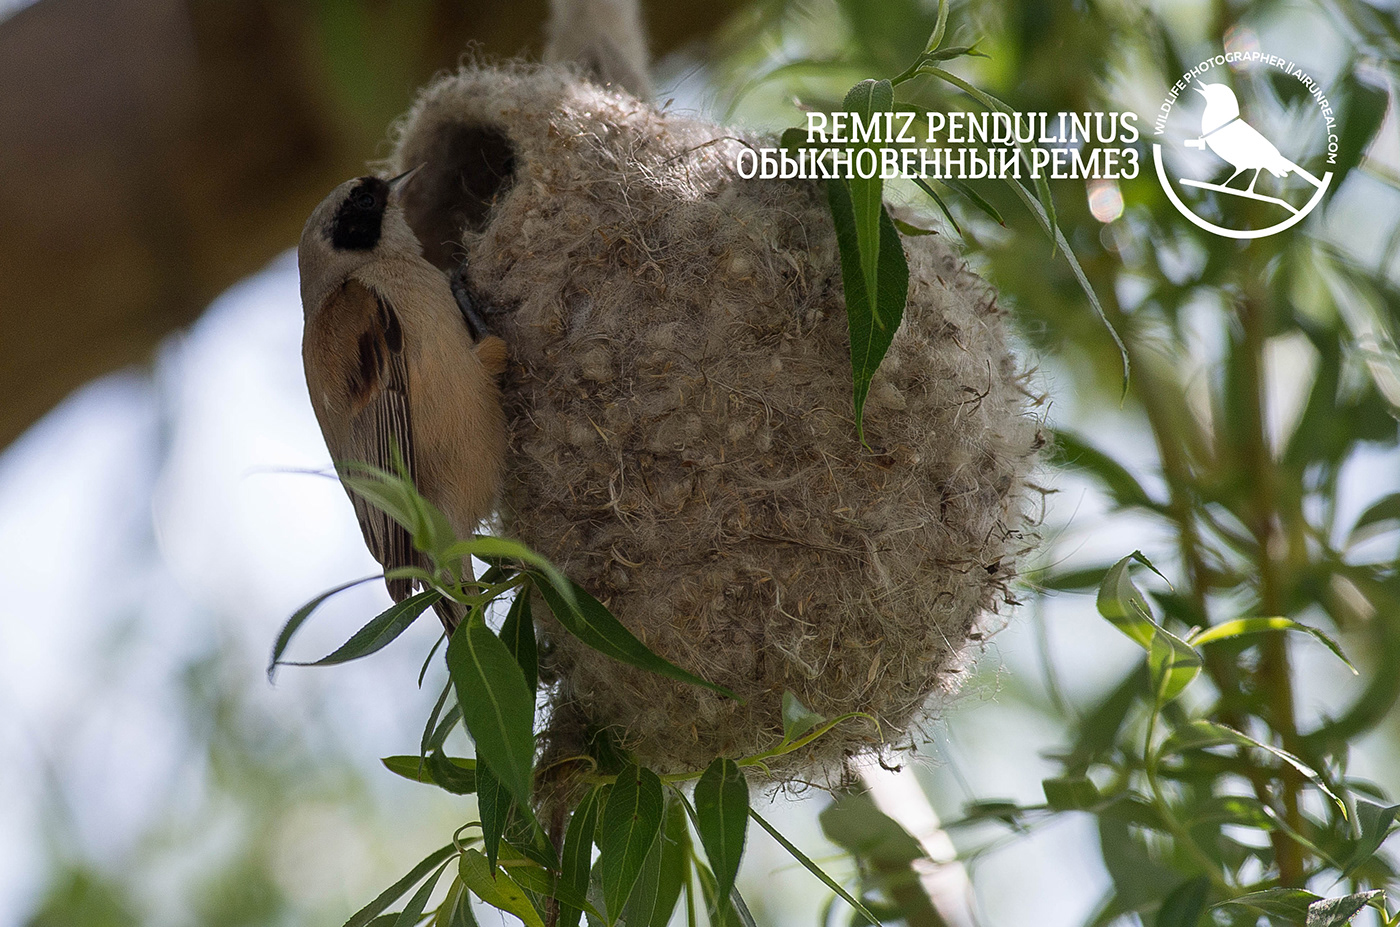 Remiz pendulinus bird Birs birdswatching volgograd Russia wildlife Eurasian penduline tit